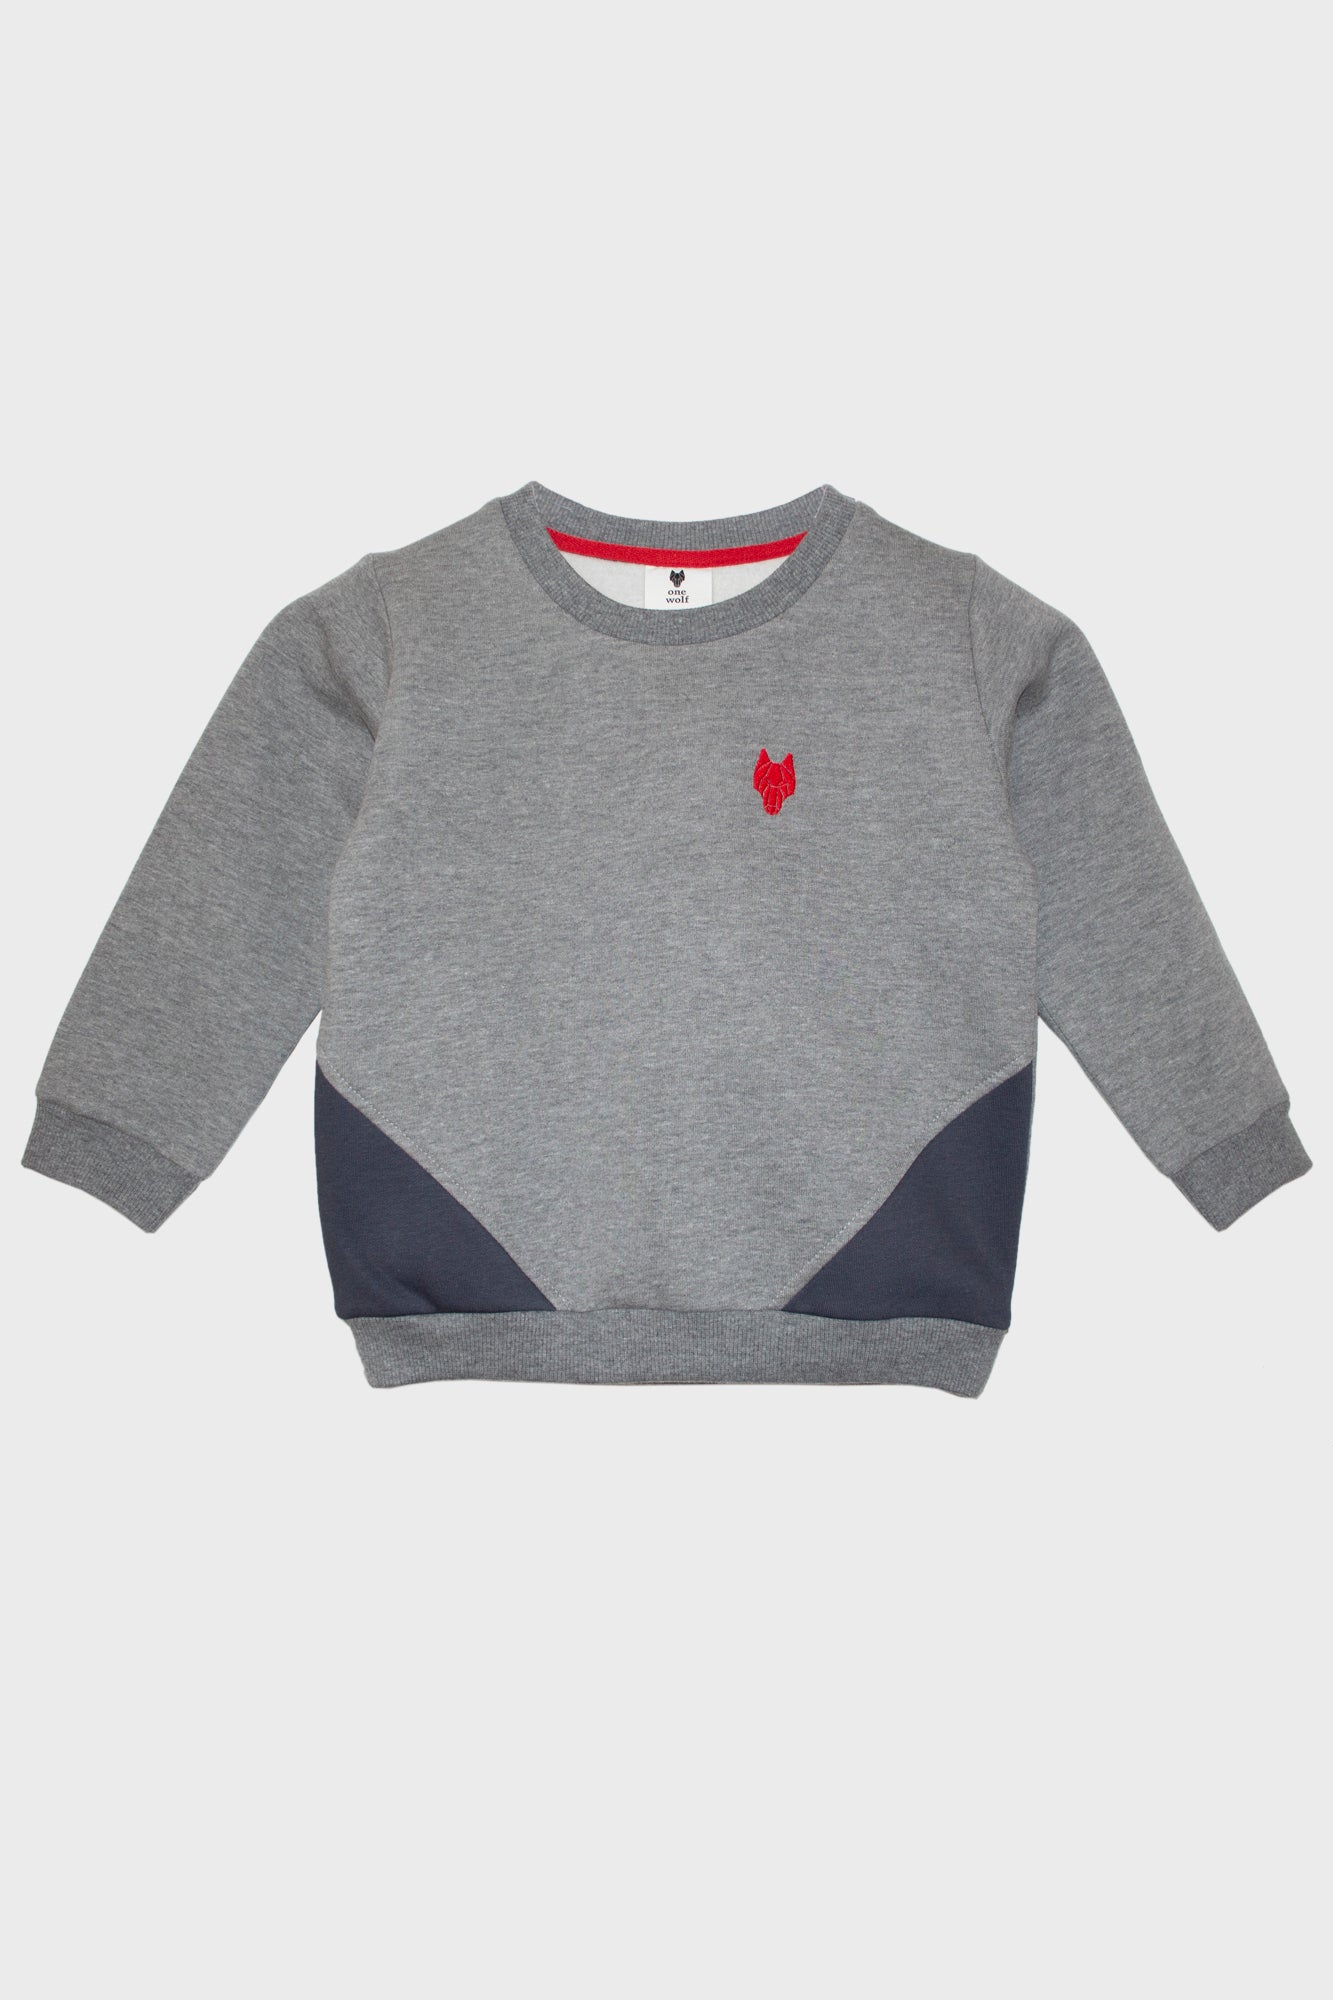 Kid’s One Wolf sweater, grey/dark grey with red logo